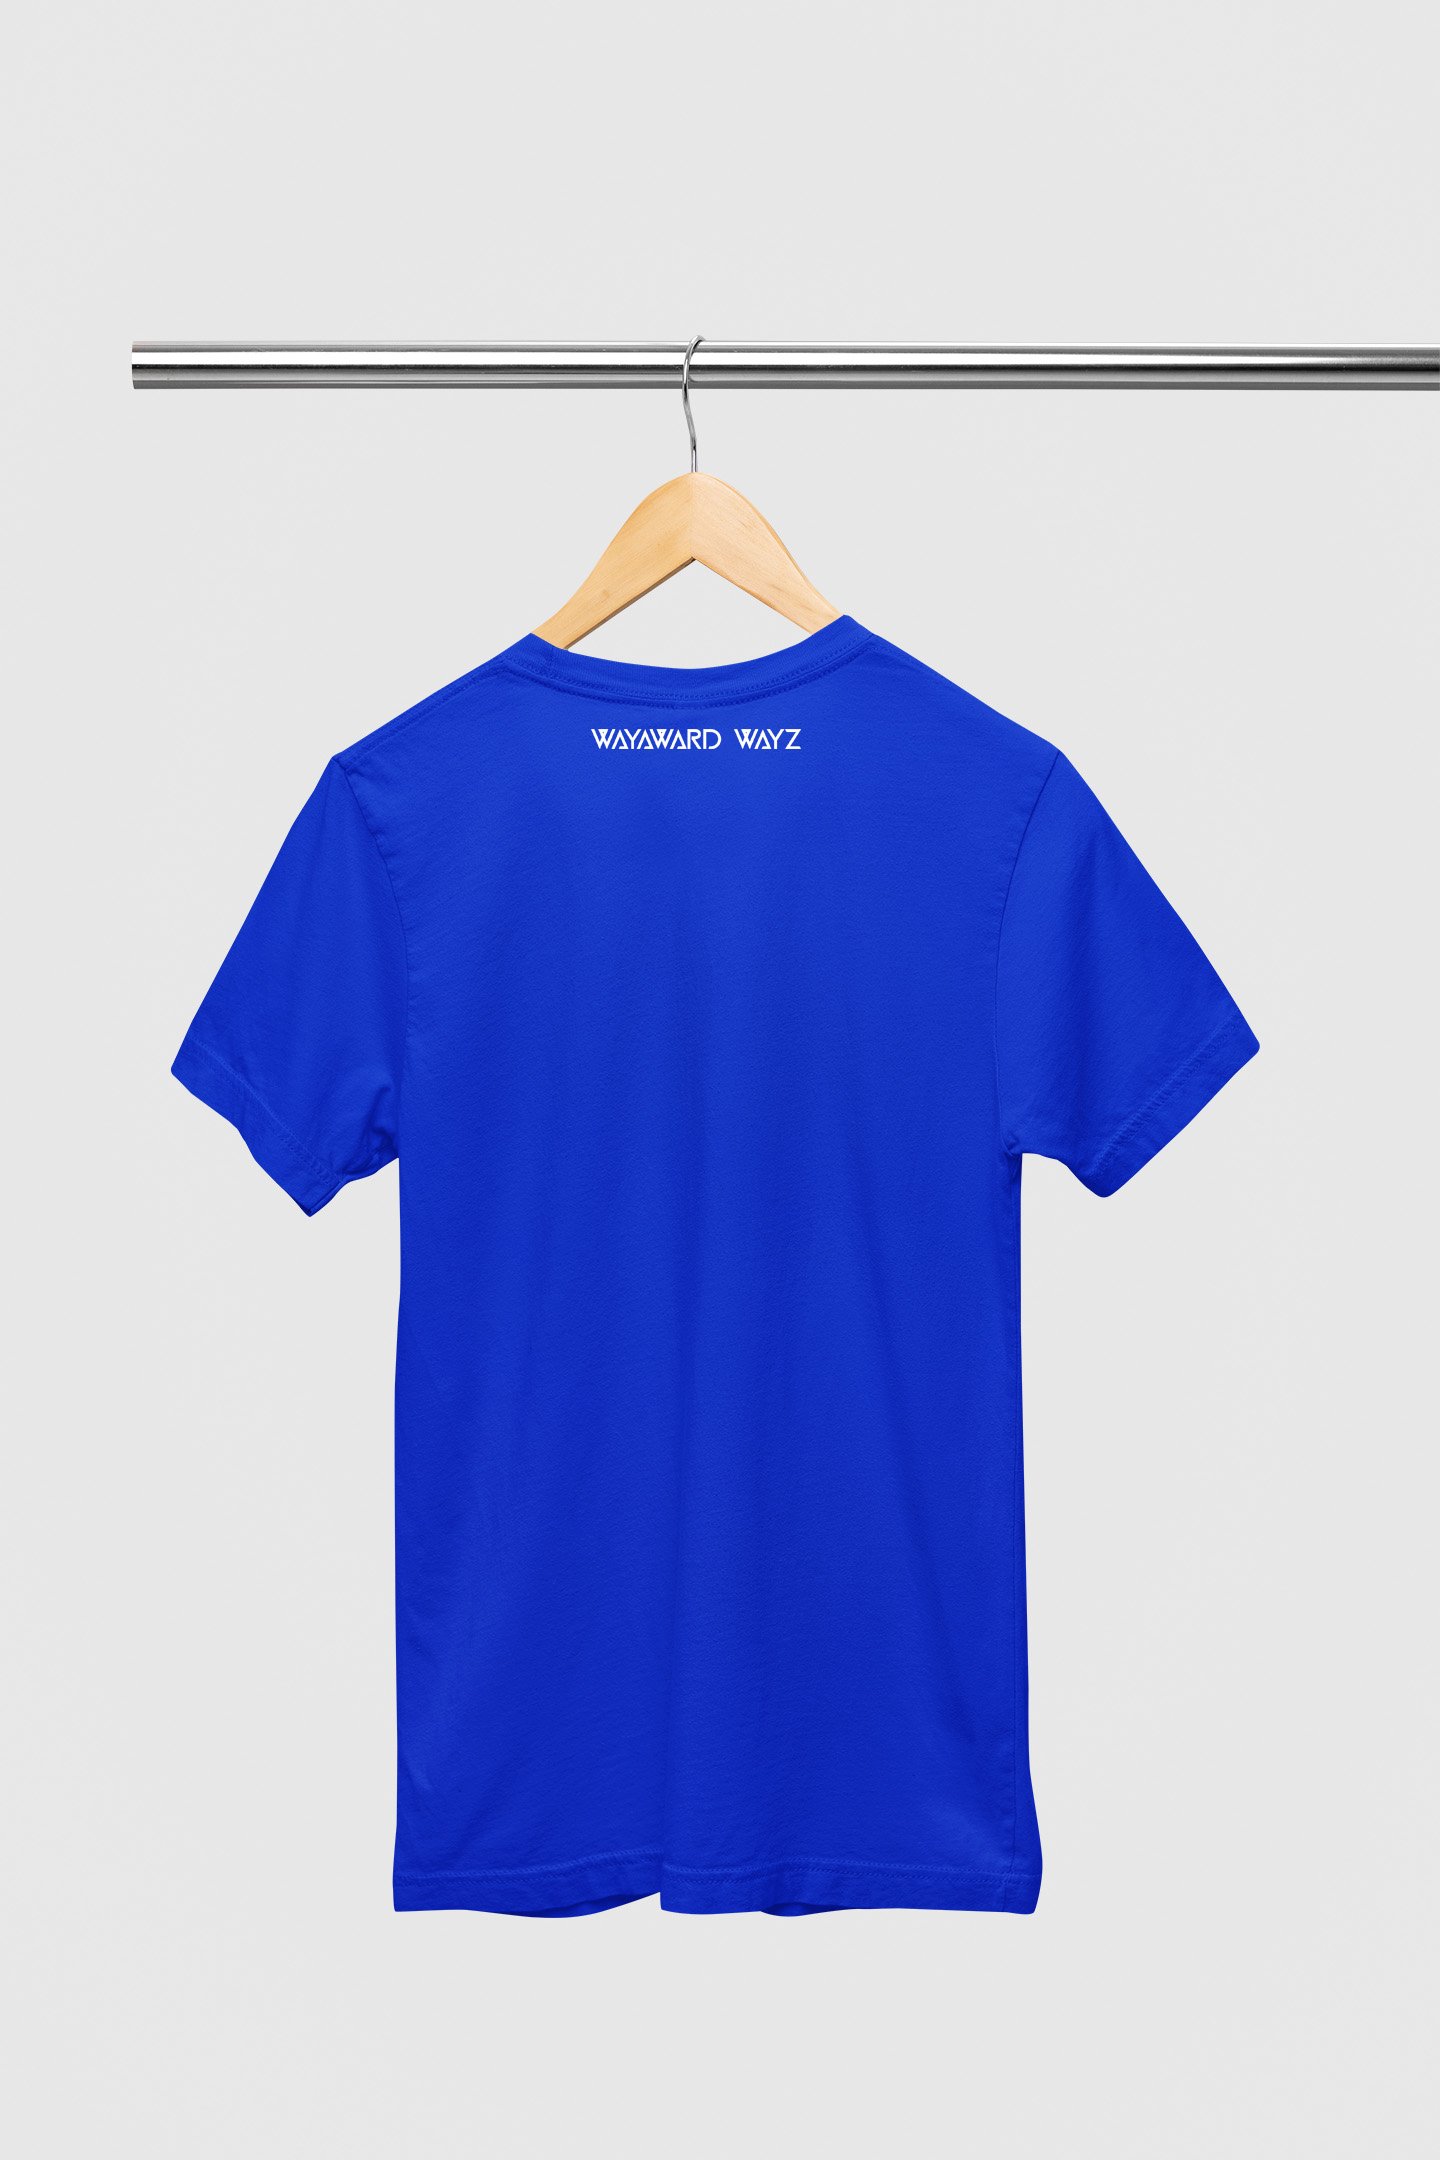 Wayward Wayz Solid T-Shirt Royal Blue-hanger back